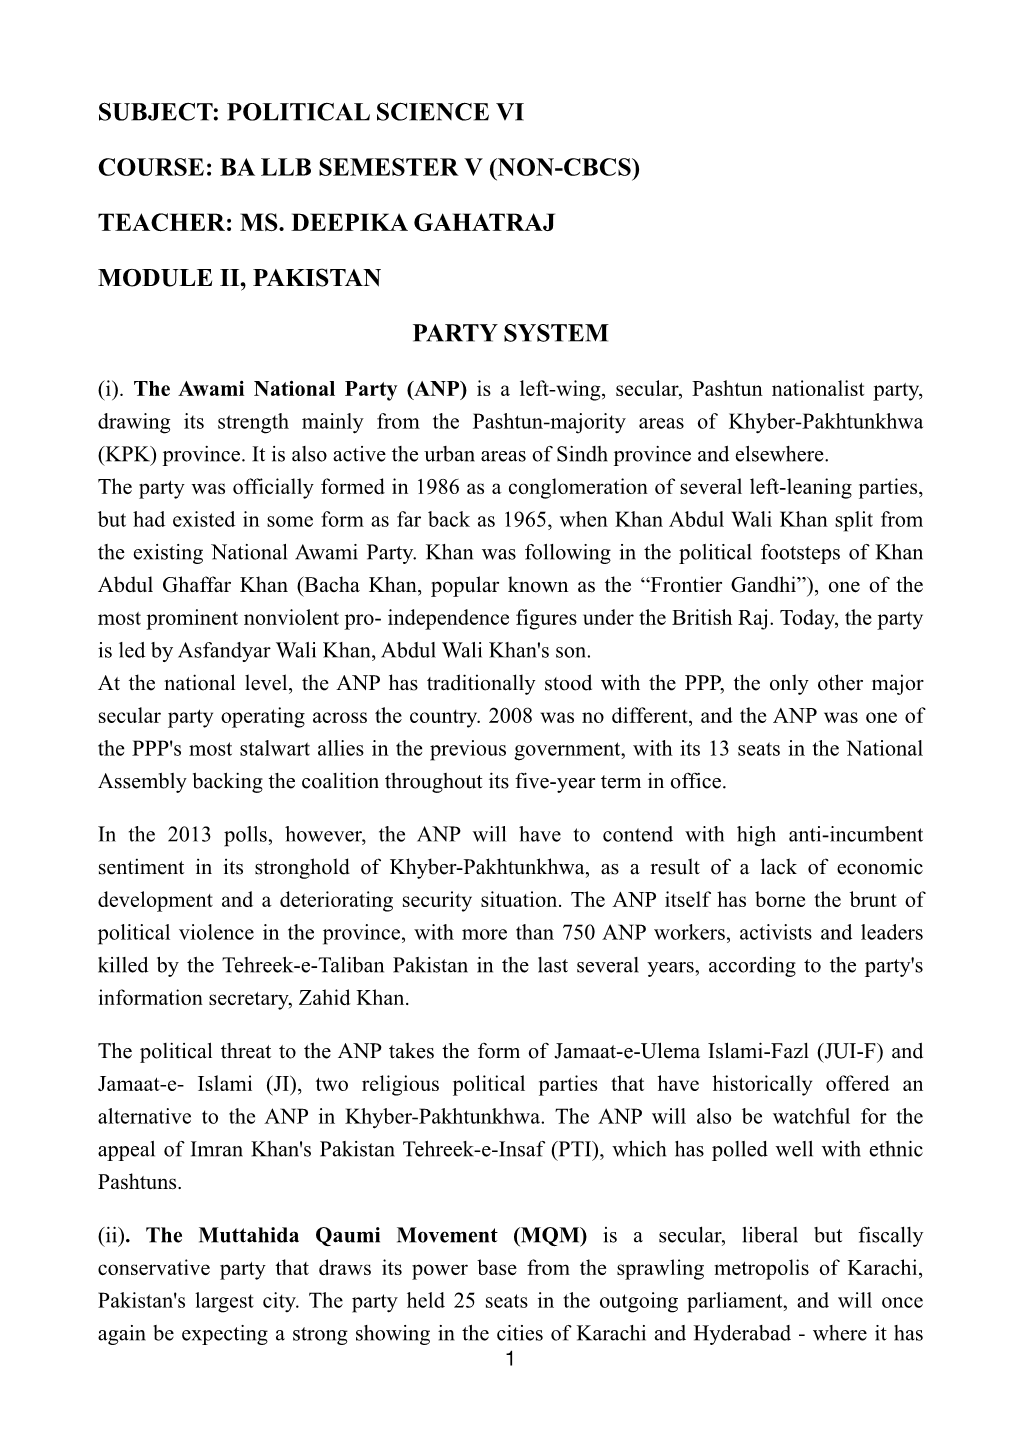 Pakistan- Party System